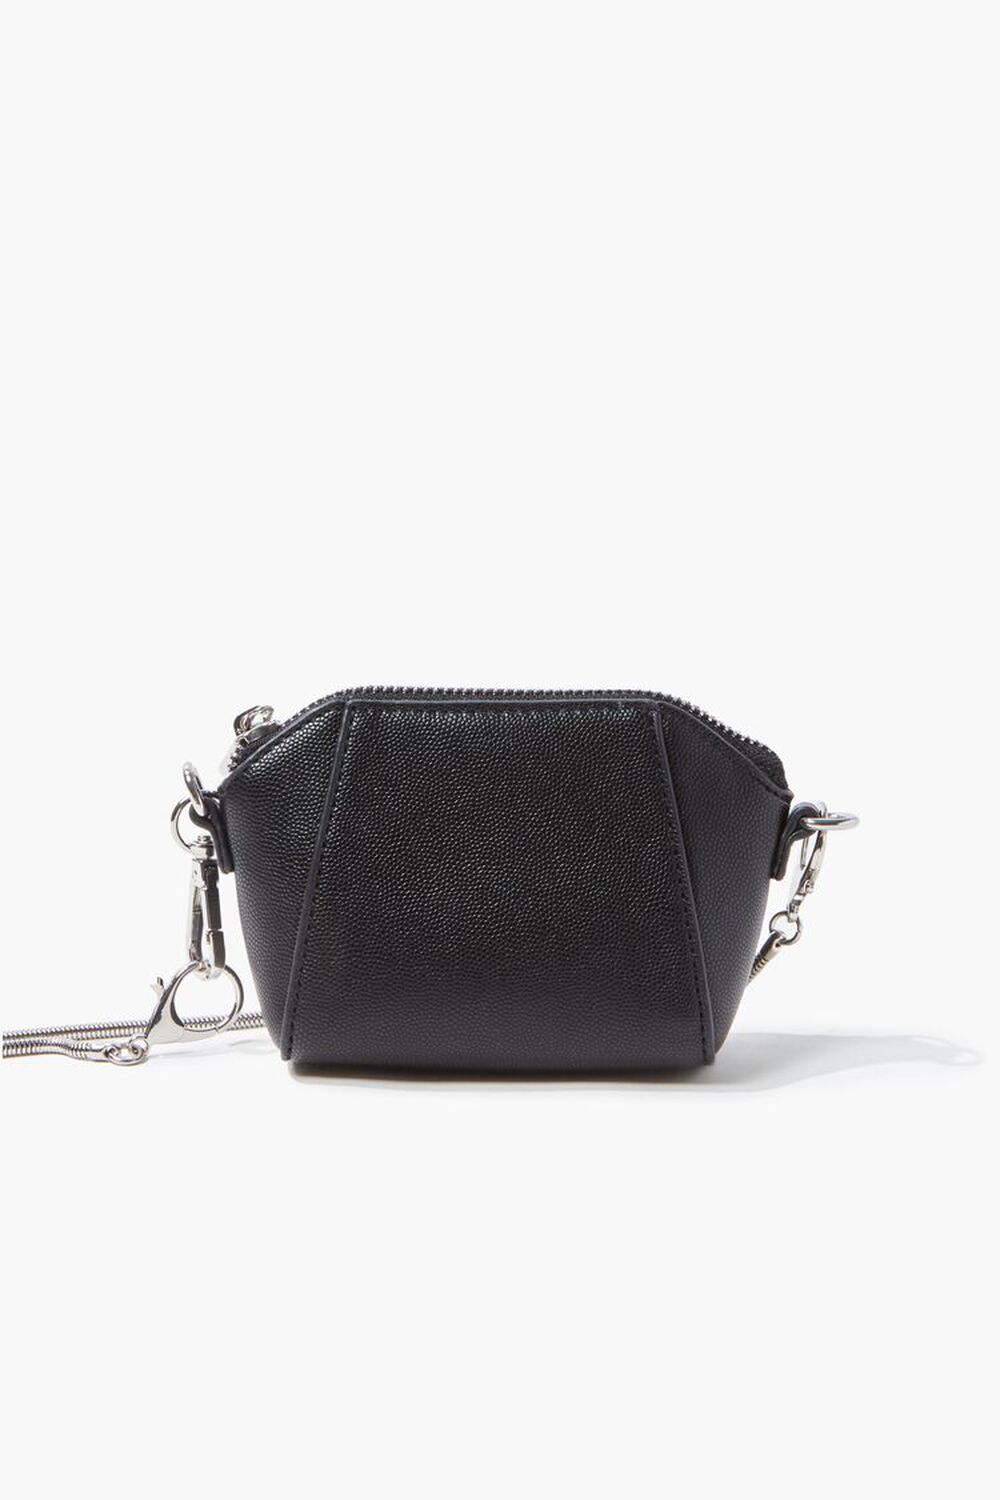 BLACK Faux Leather Crossbody Bag, image 3